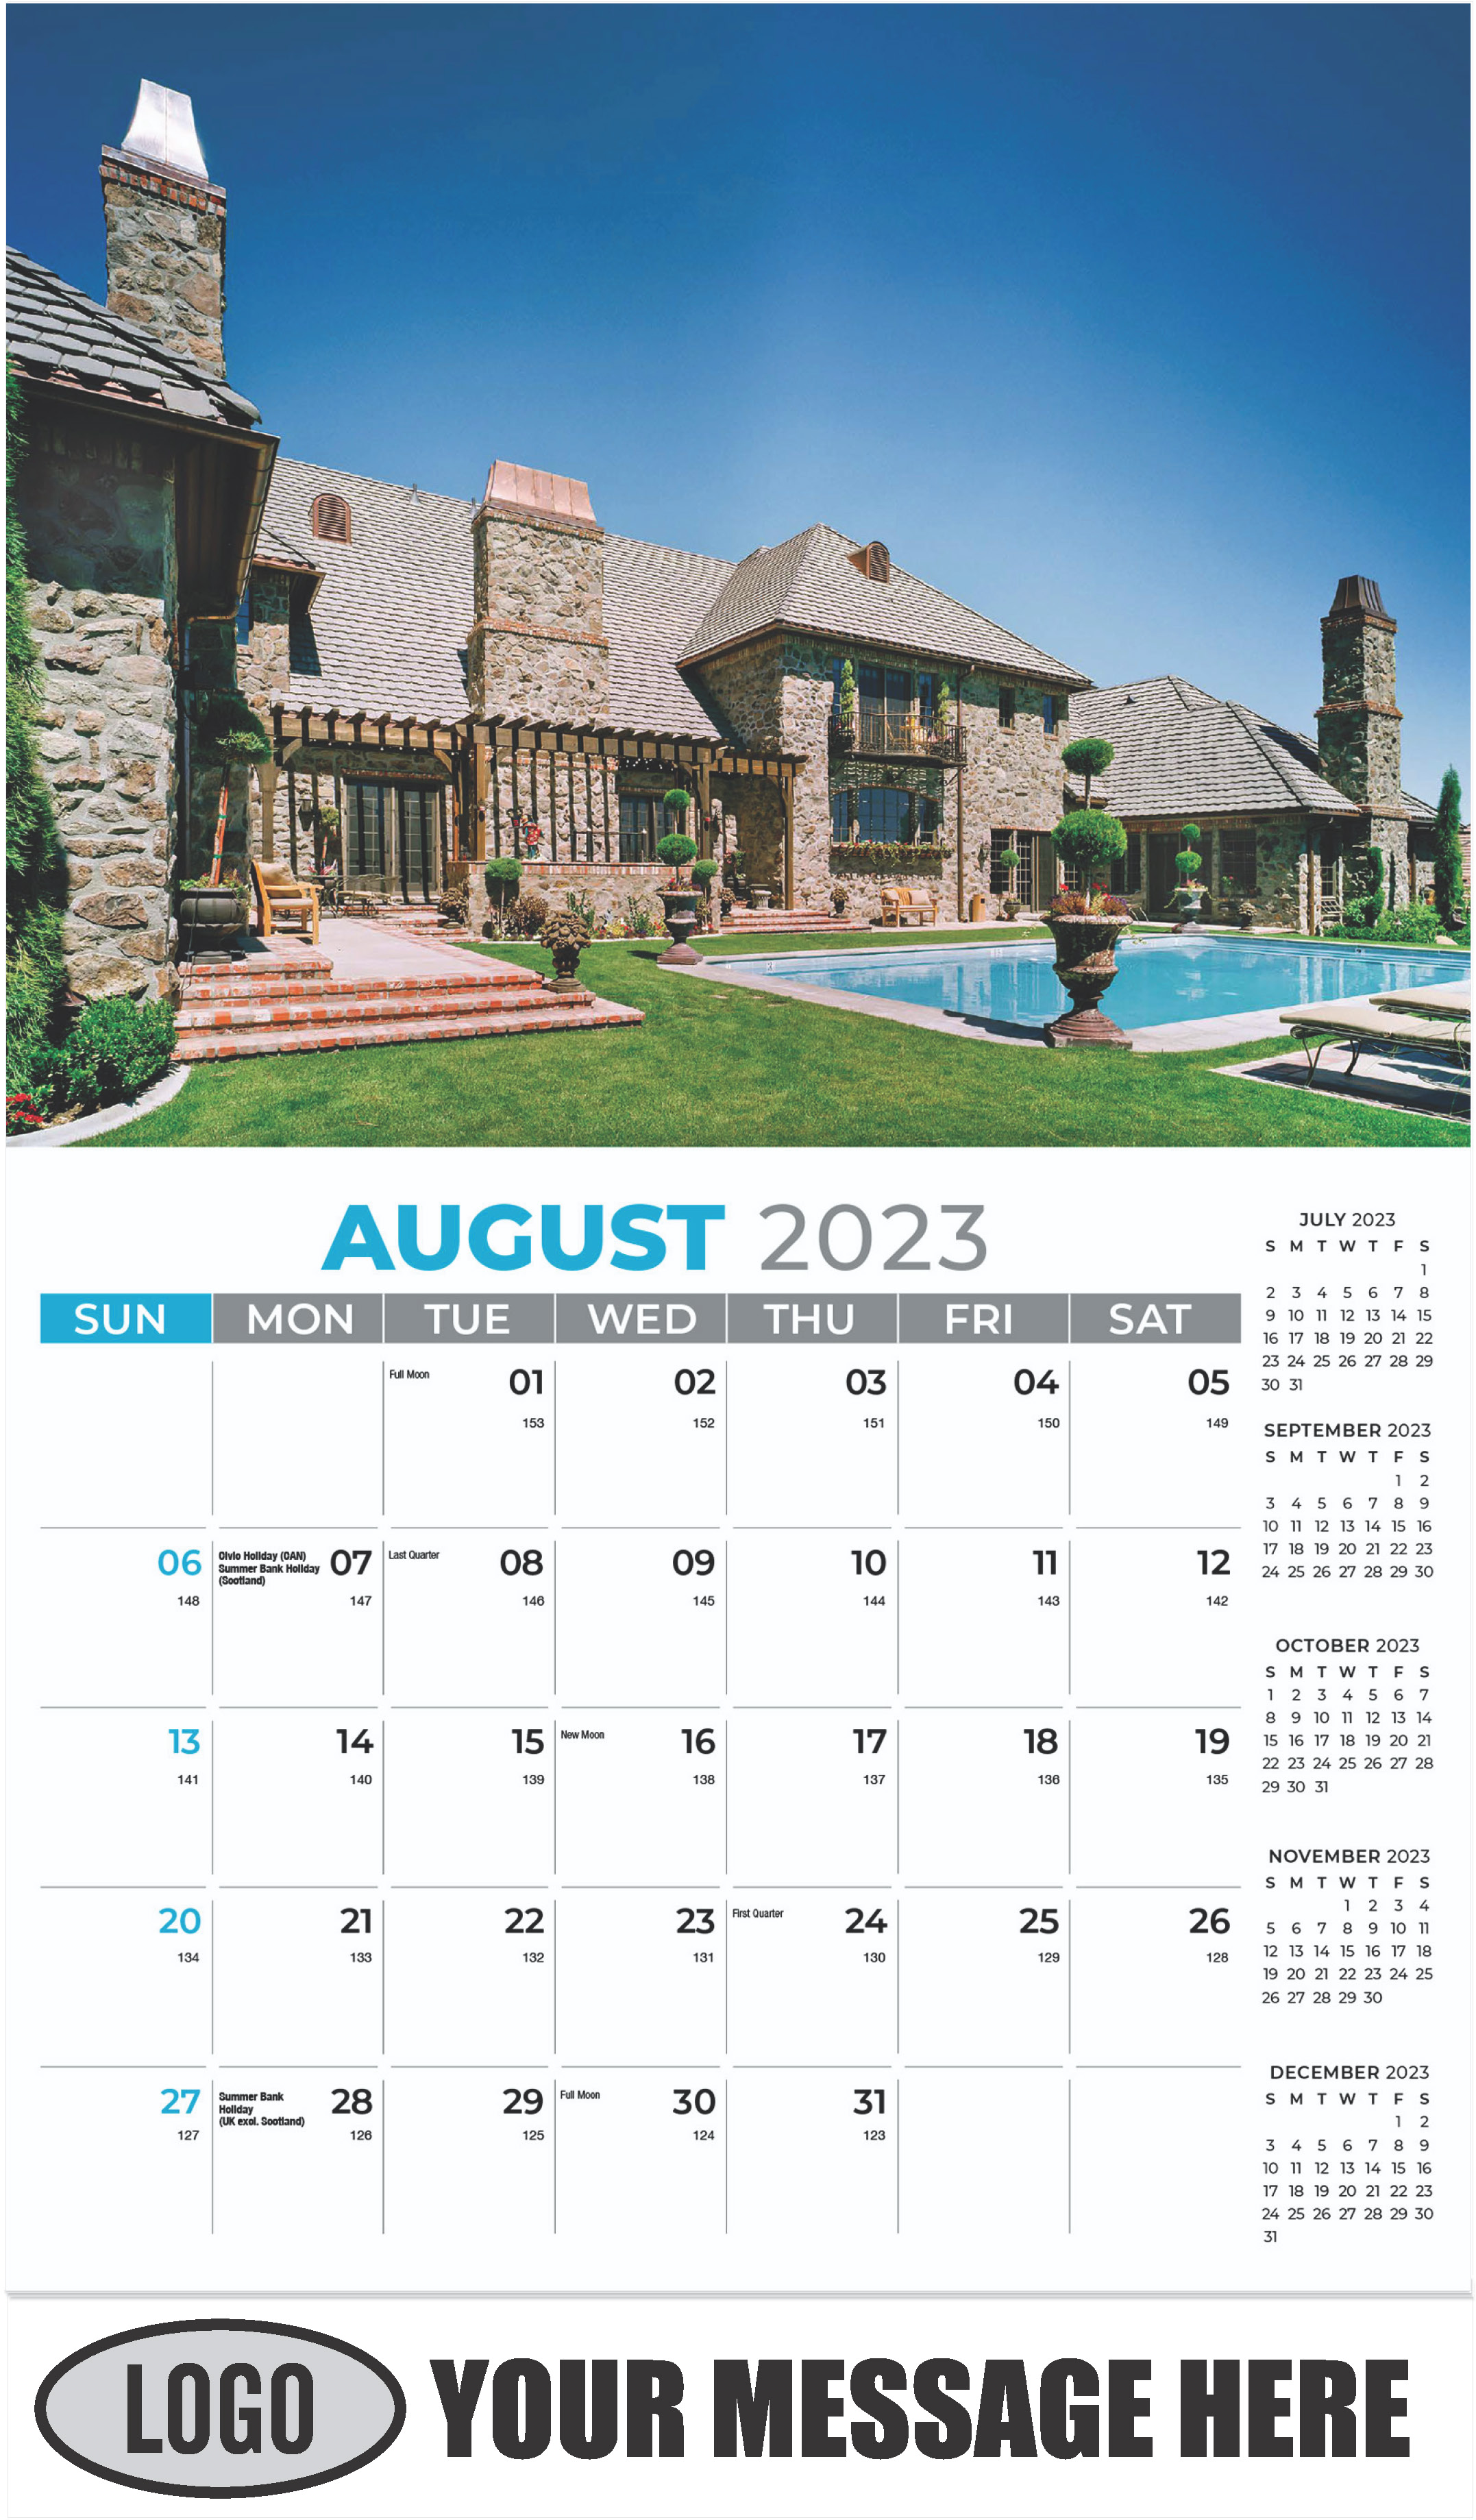 Luxury Homes Calendar - August - Homes 2023 Promotional Calendar